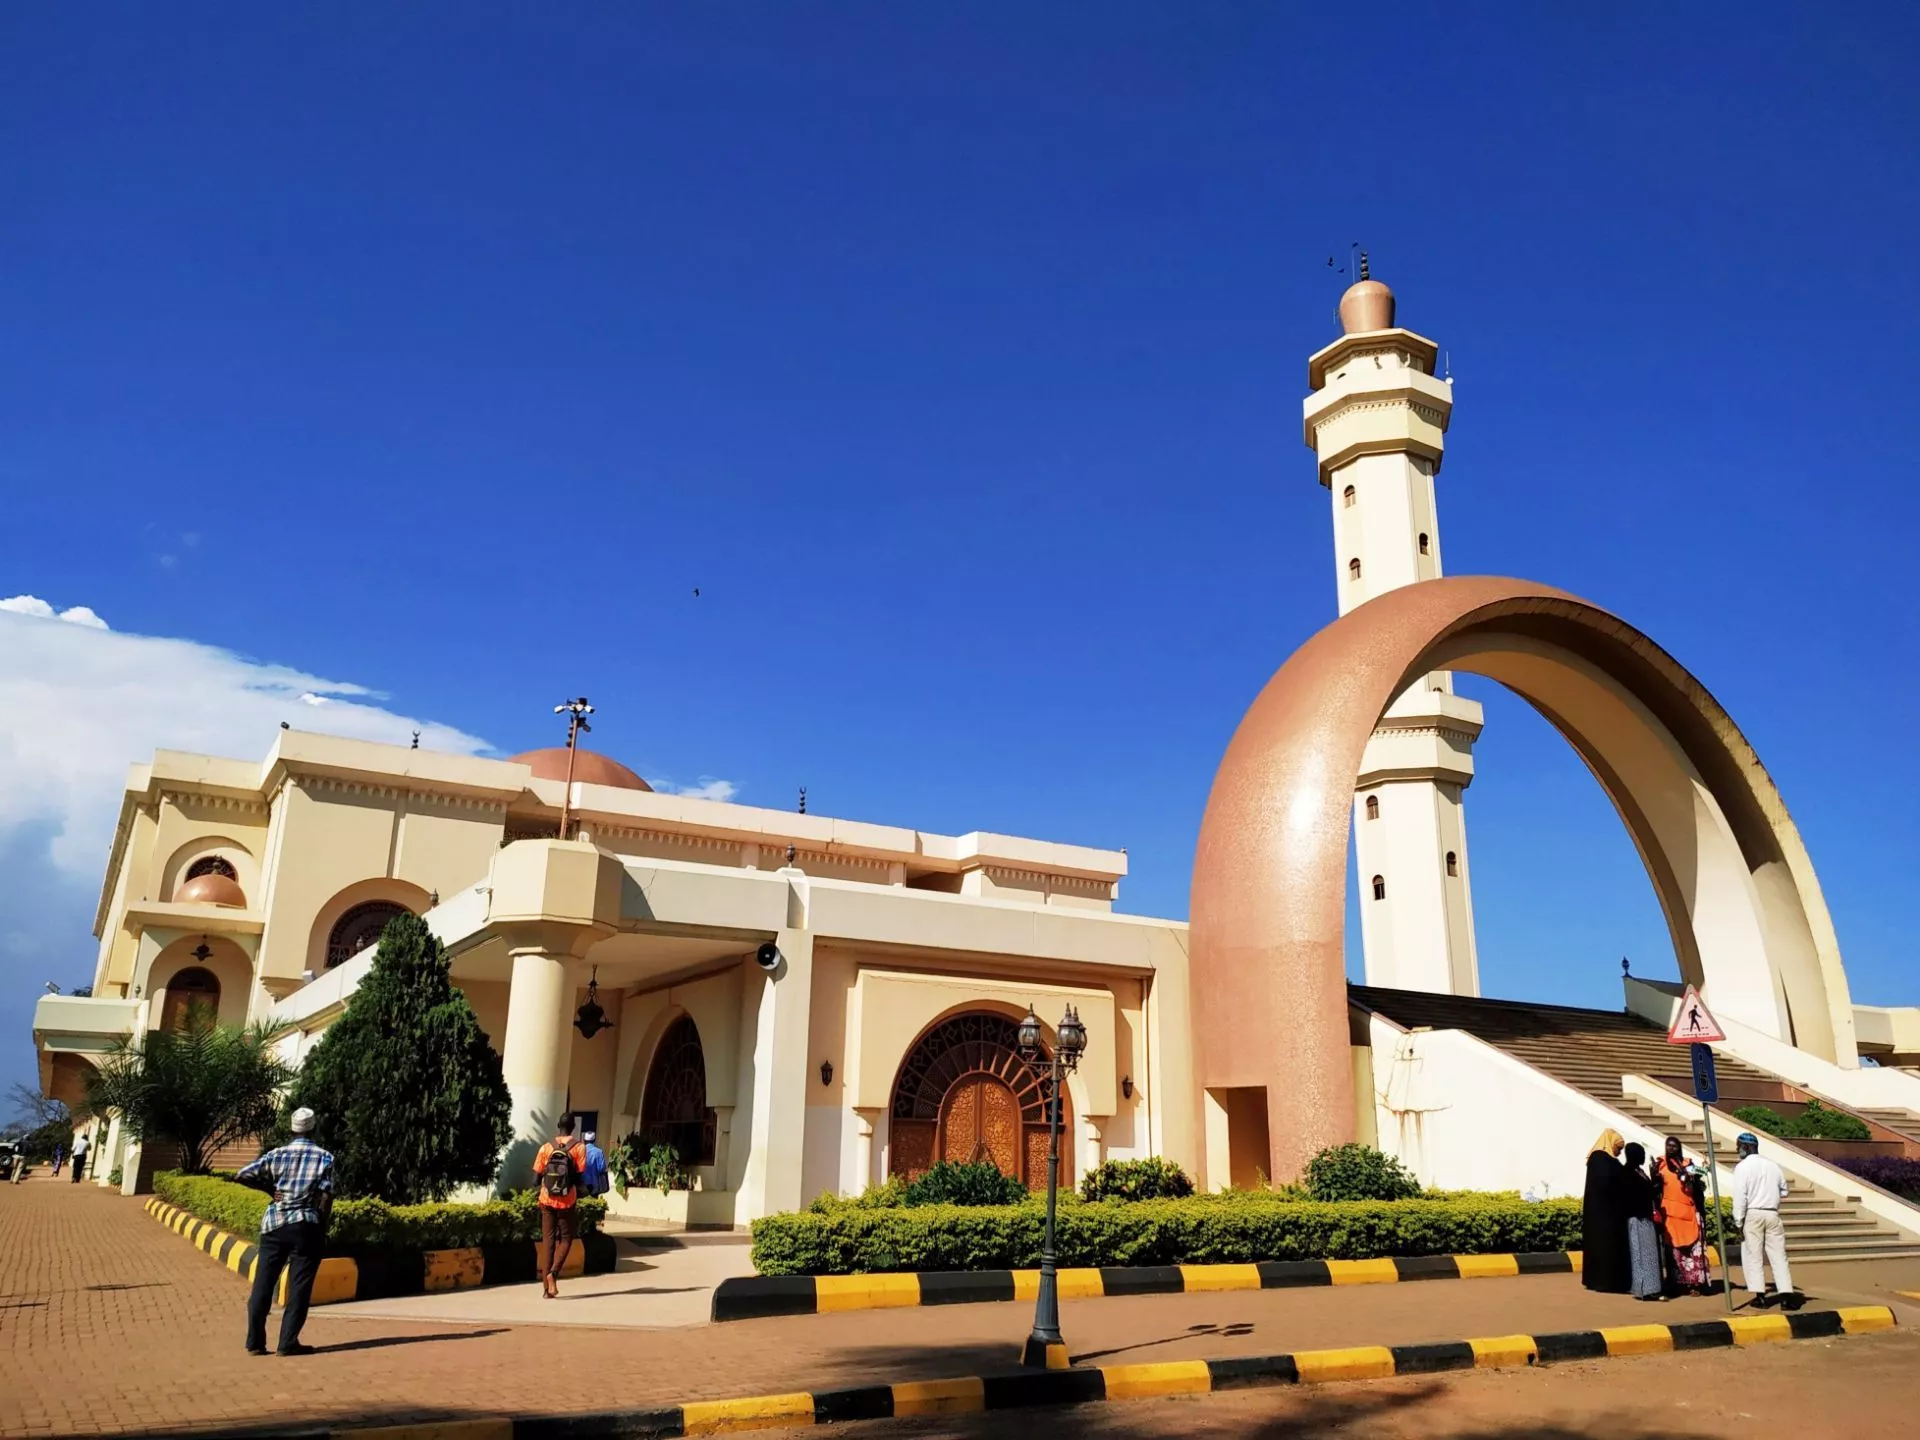 Uganda National Mosque in Uganda, Africa | Architecture - Rated 3.6